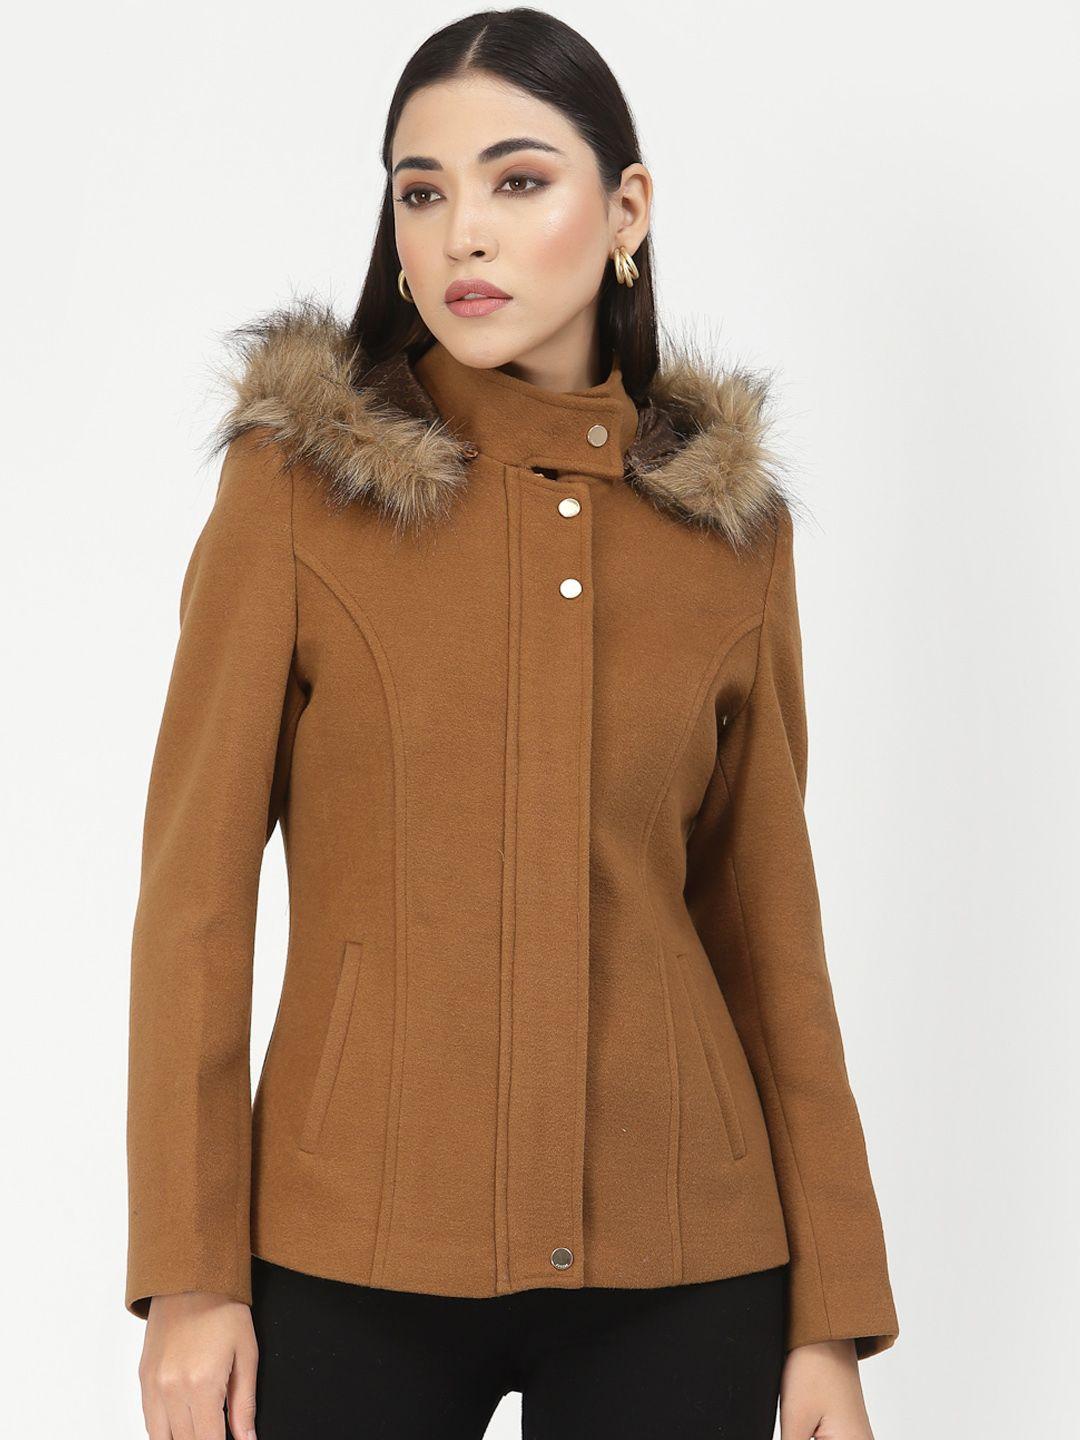 juelle women brown hooded parka coat